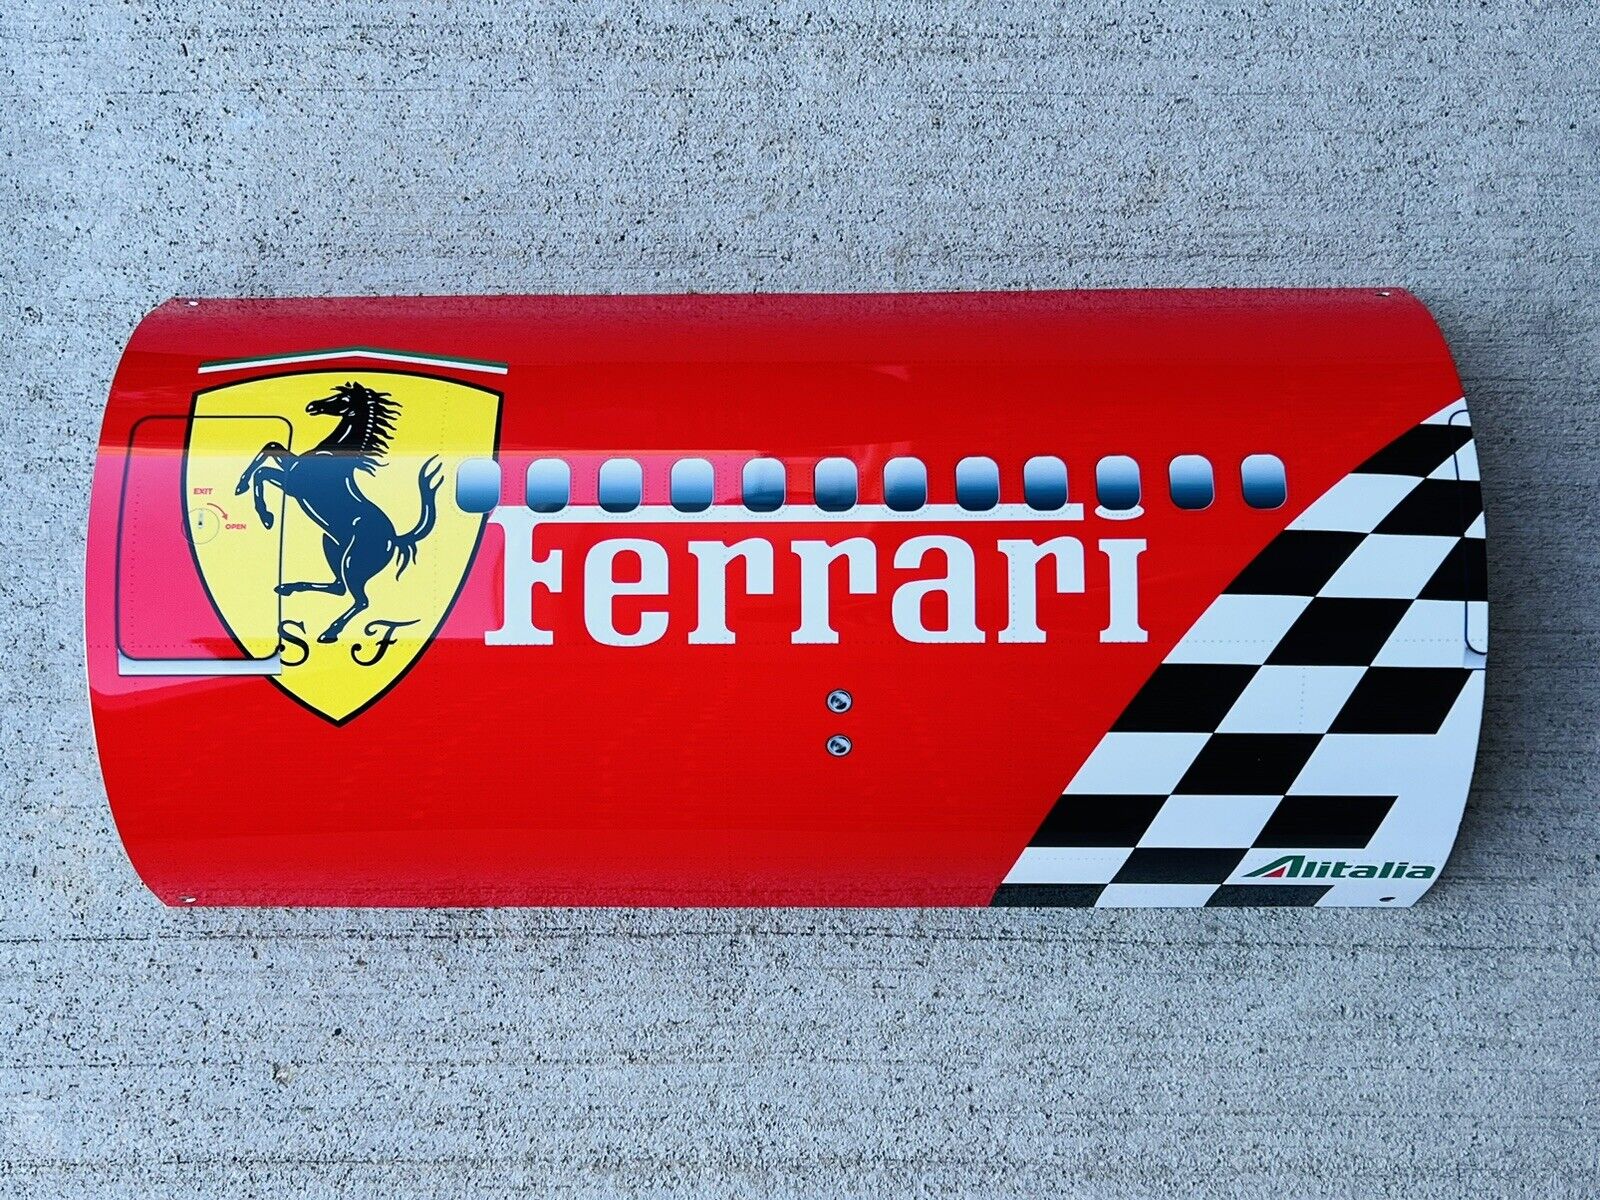 Alitalia Ferrari  Racing Curved Side Airplane Sign